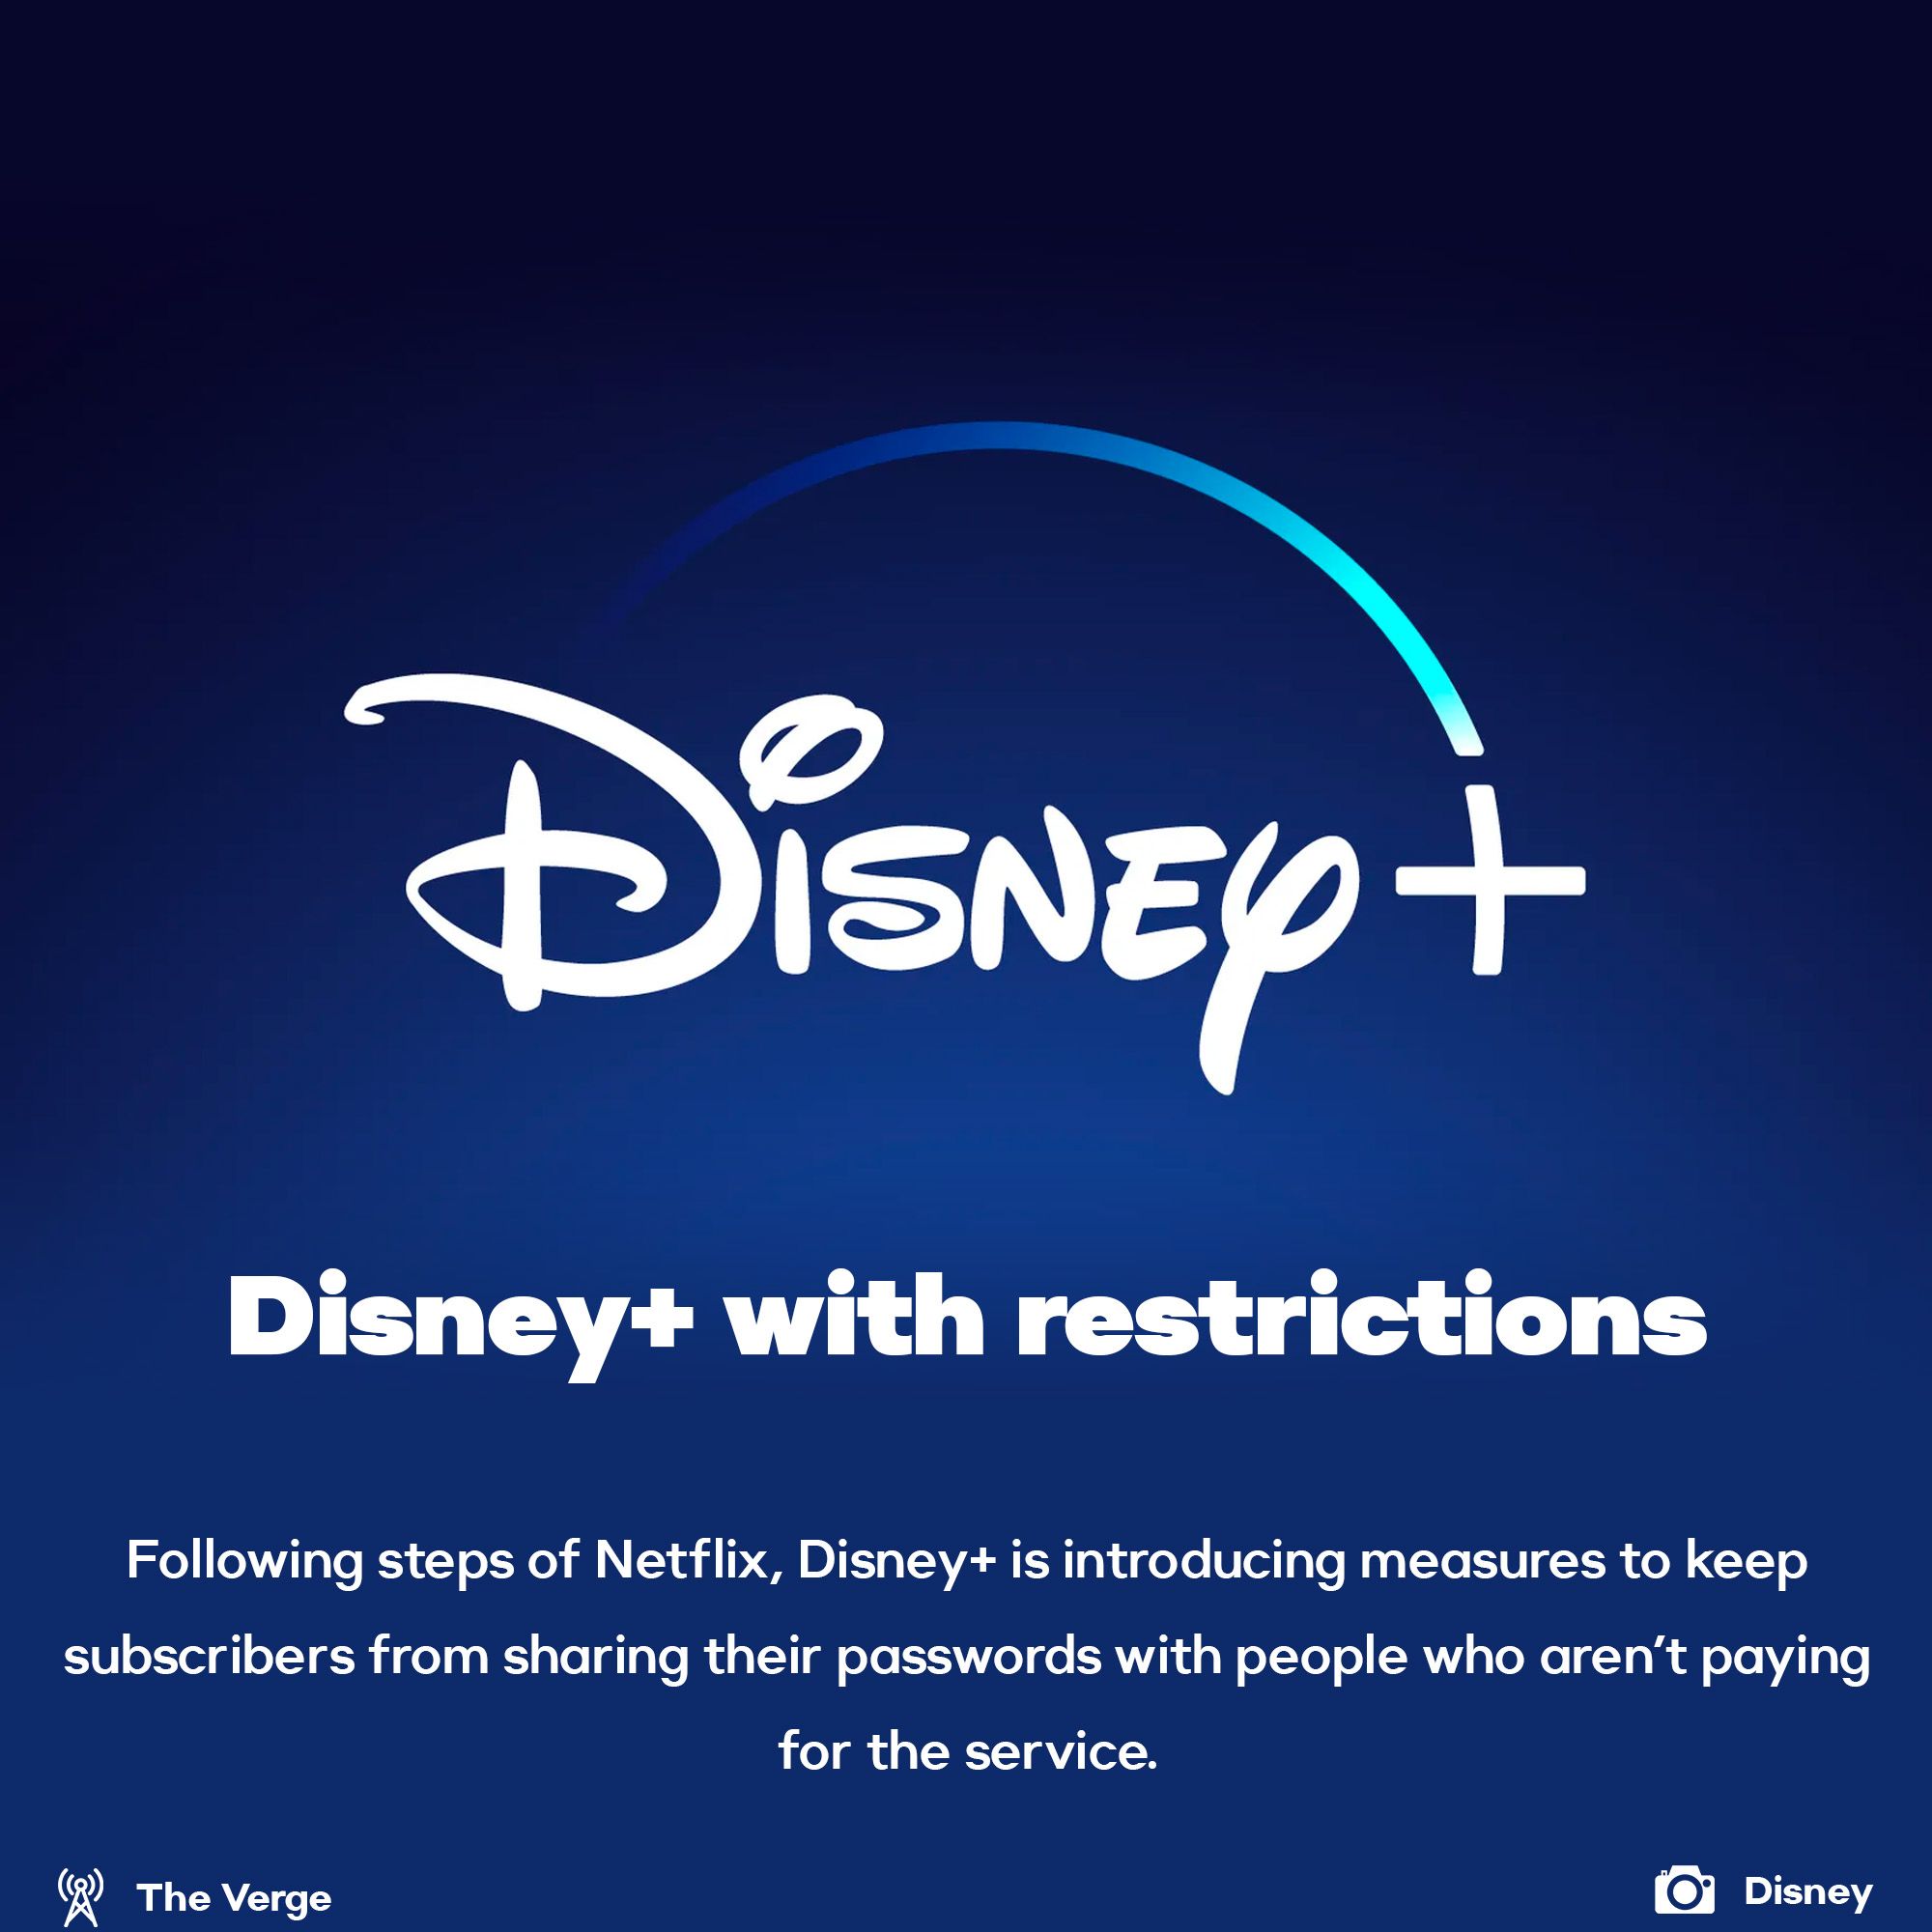 Disney+ started password sharing crackdown